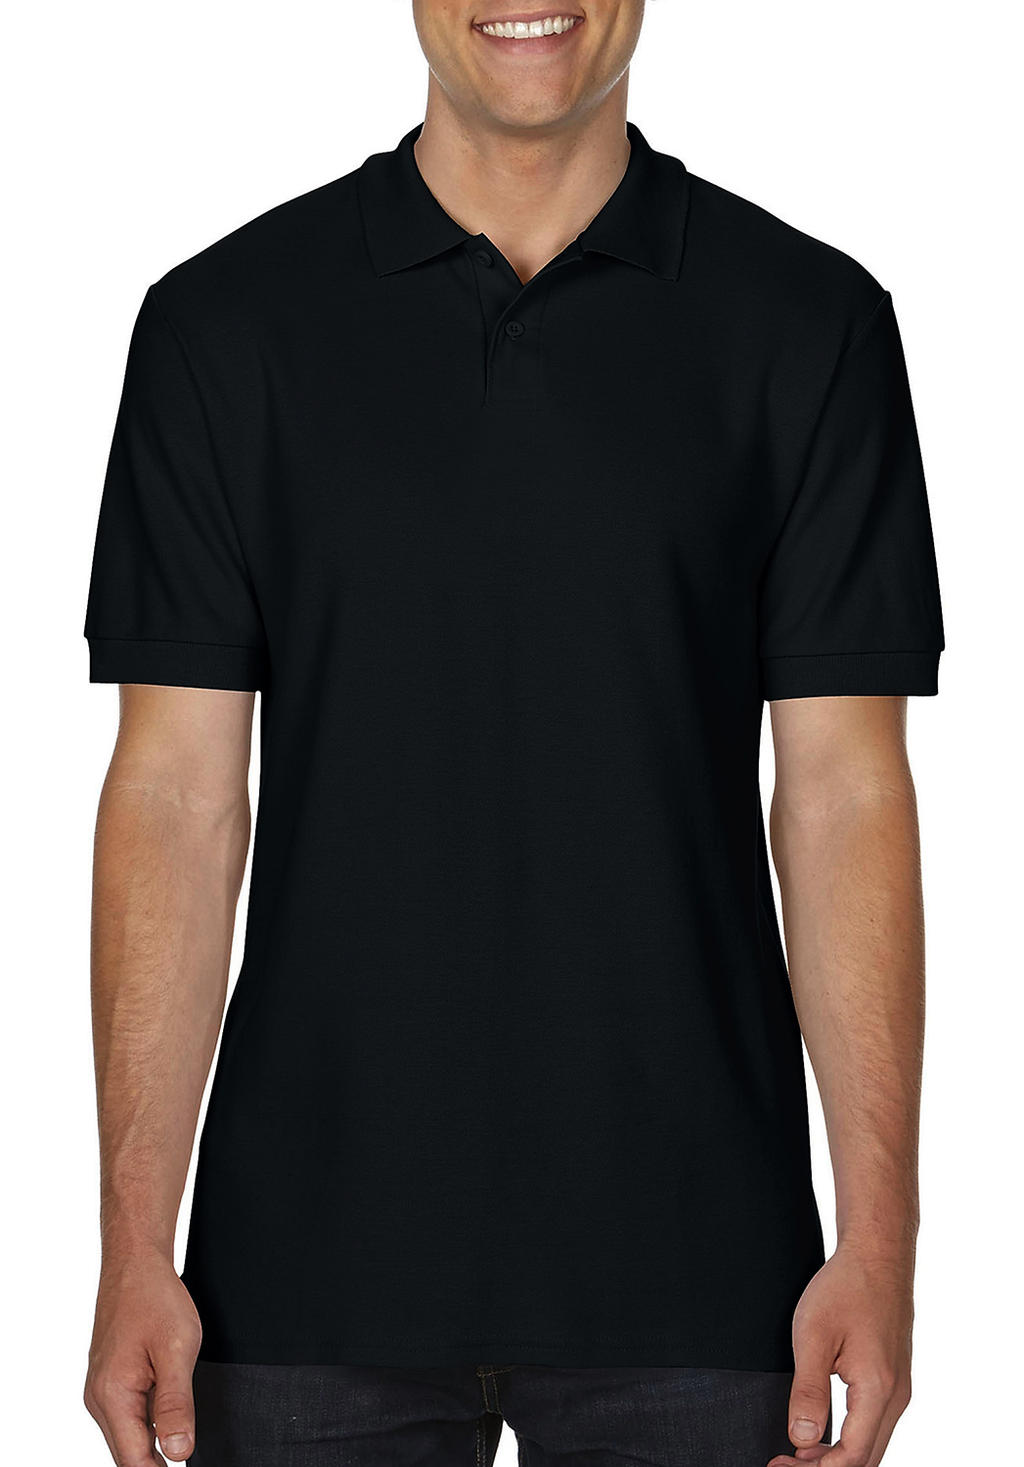 Gildan Herren Polo Shirt T-Shirt Kurzarm Piqué Basic Baumwolle Hemd